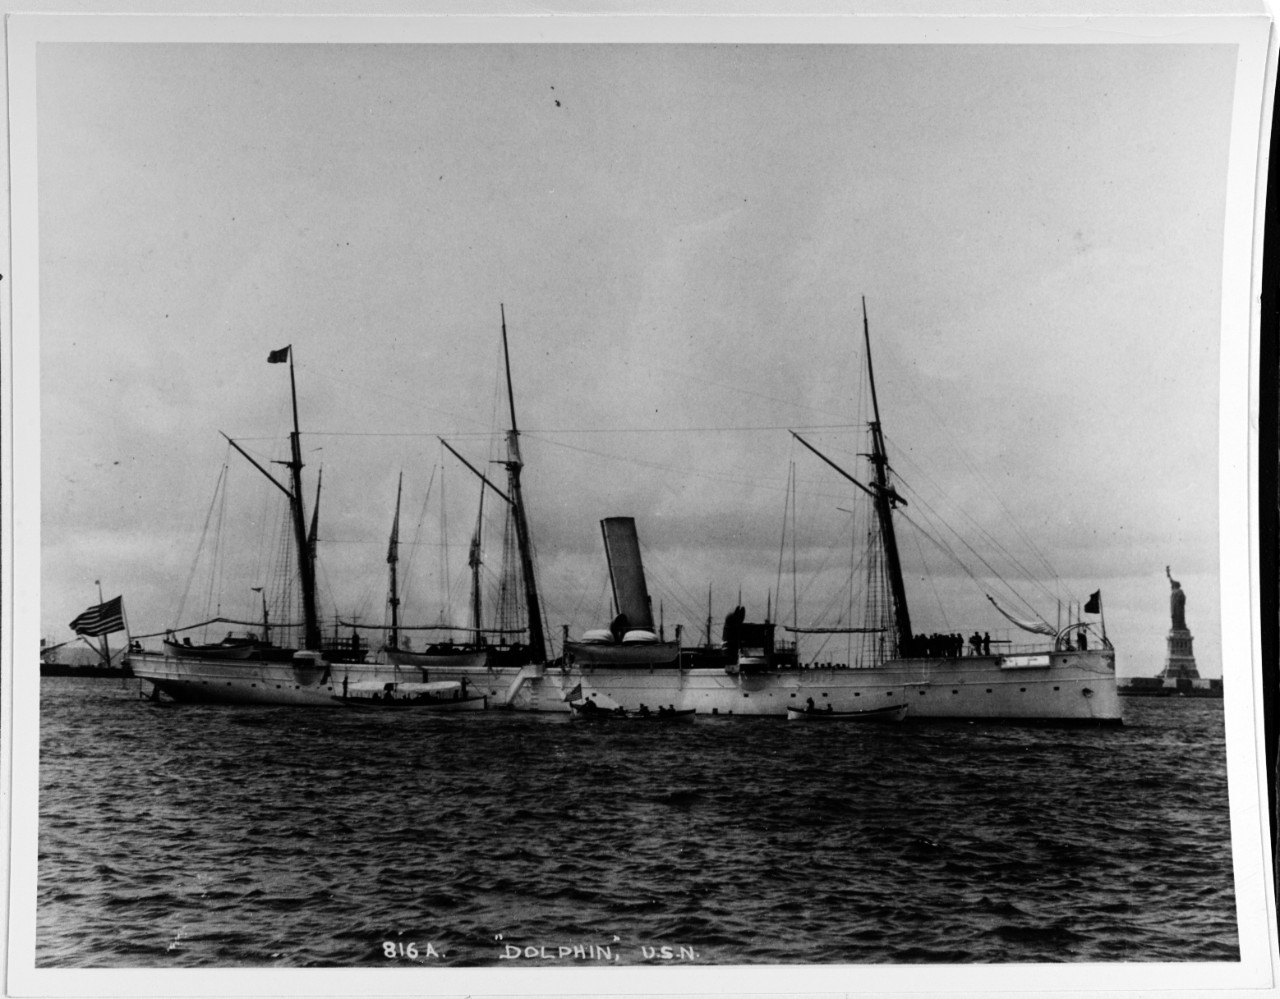 USS DOLPHIN (1885-1922)